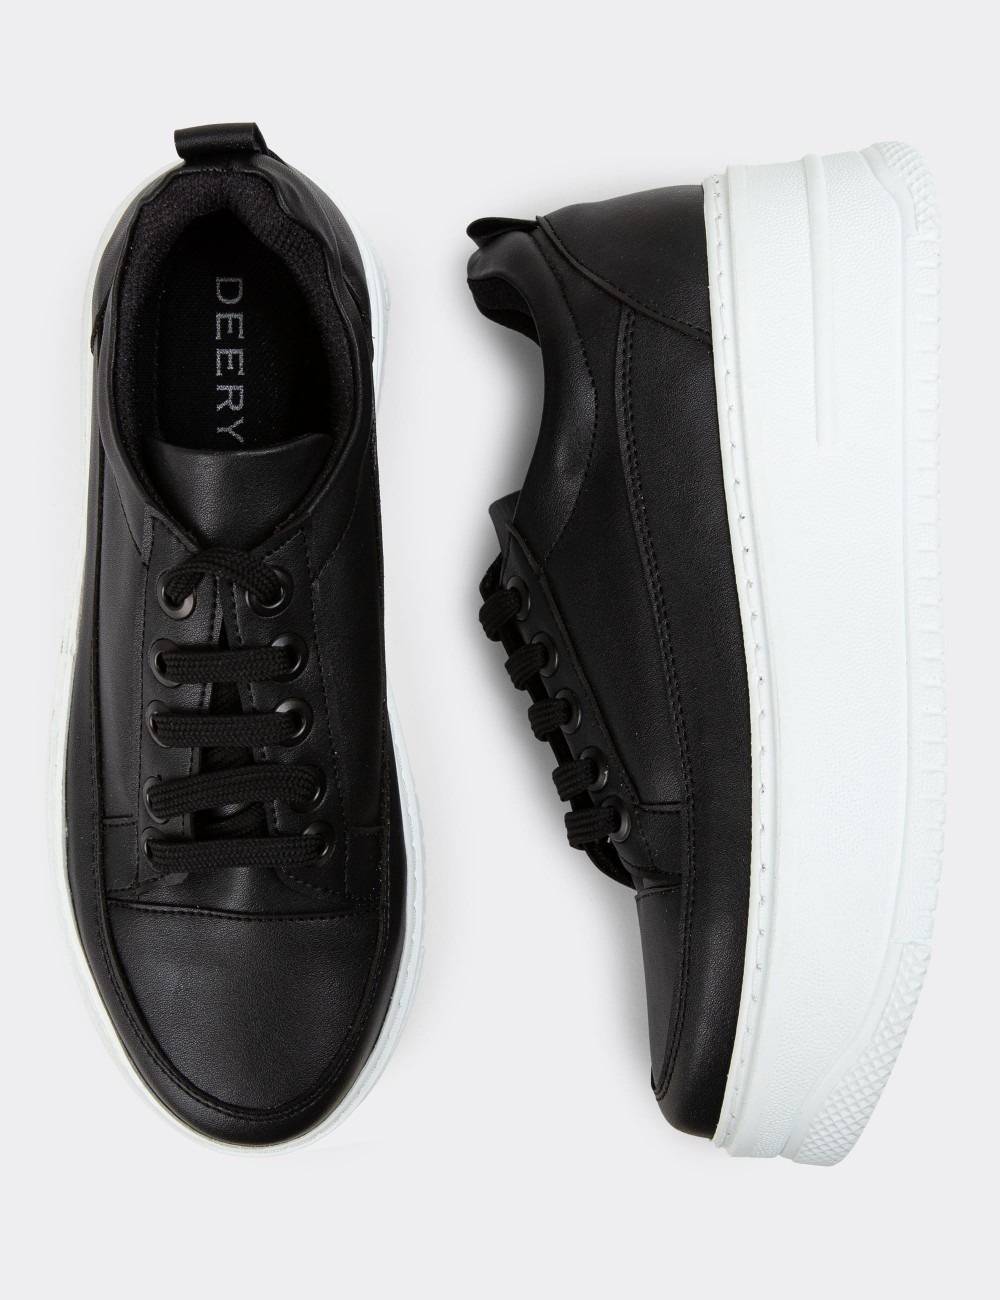 Black Sneakers - CE175ZSYHC01